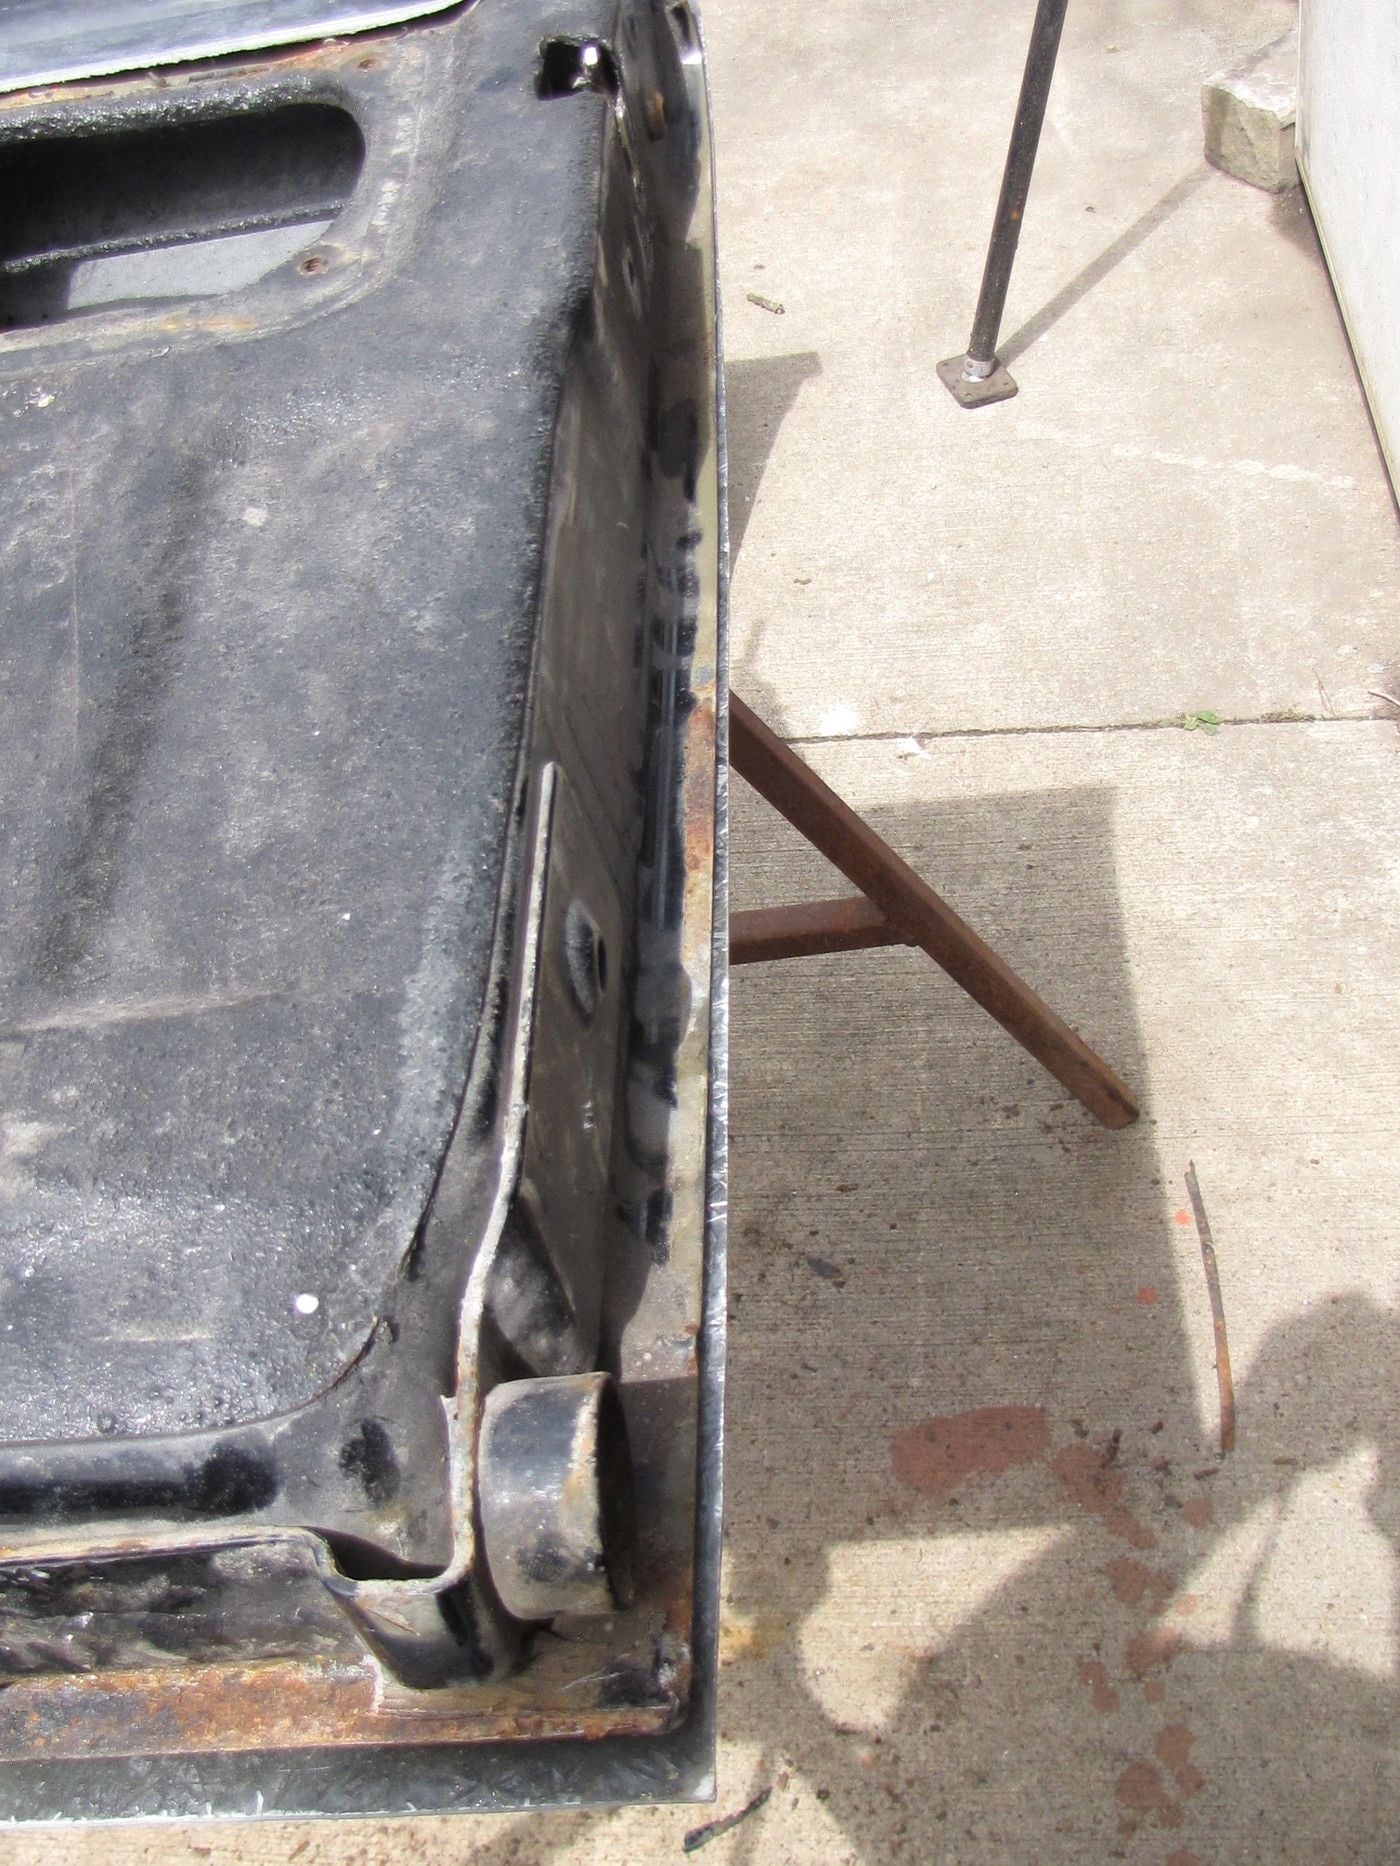 My My adventures with tailgate rust repair (PIC'S) - DodgeForum.com